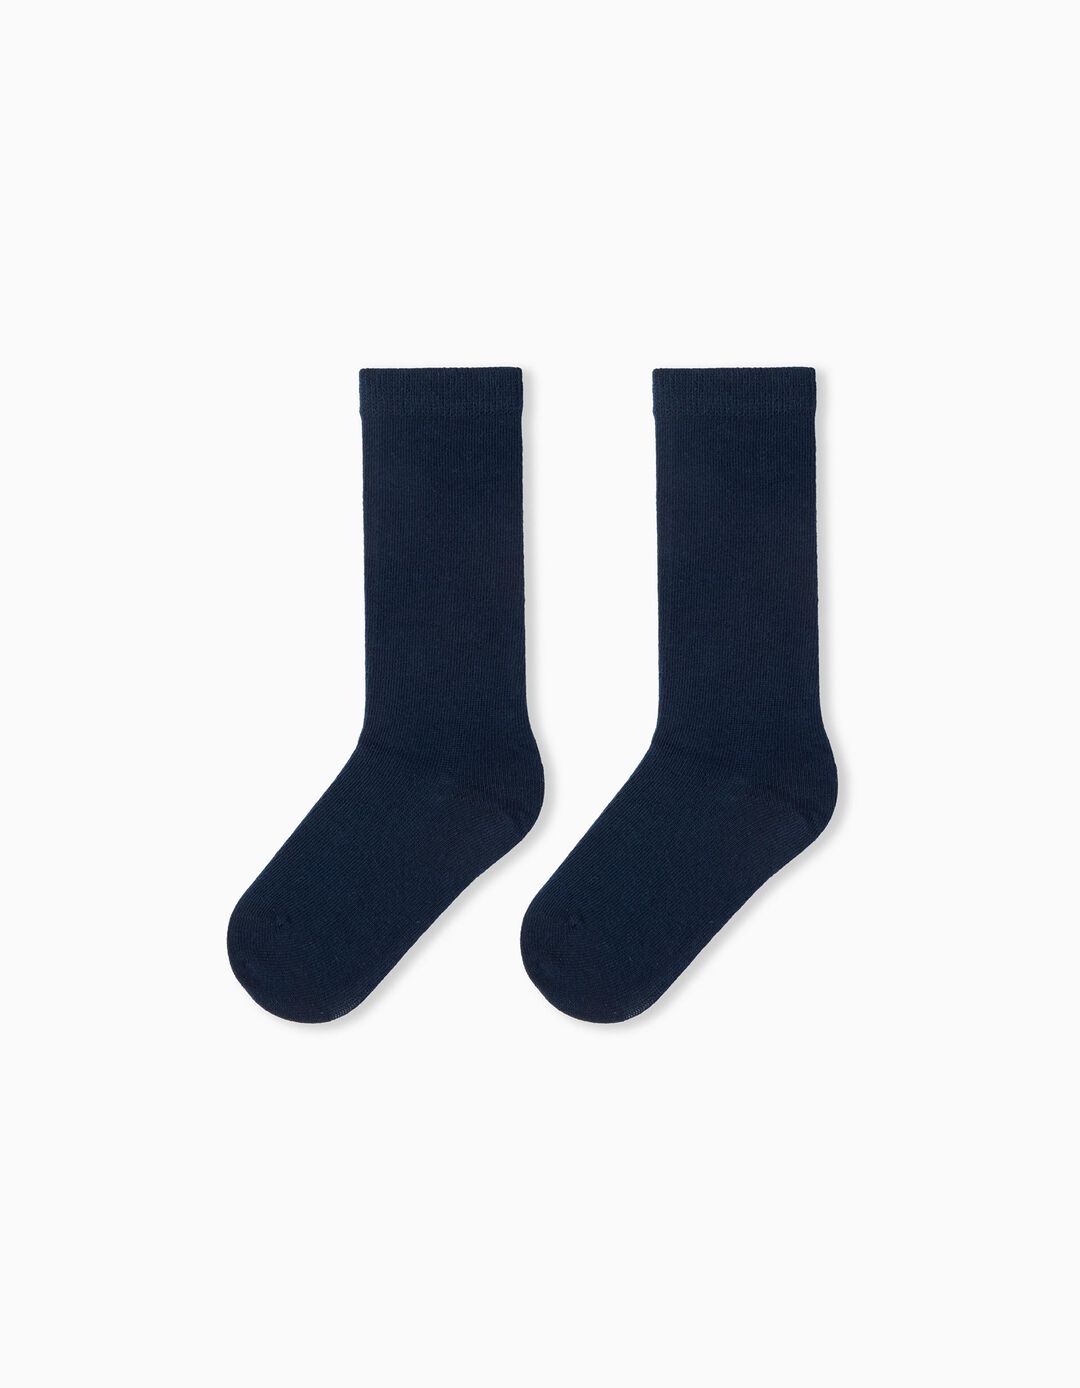 2 Pairs of High Socks Pack, Baby Boys, Dark Blue